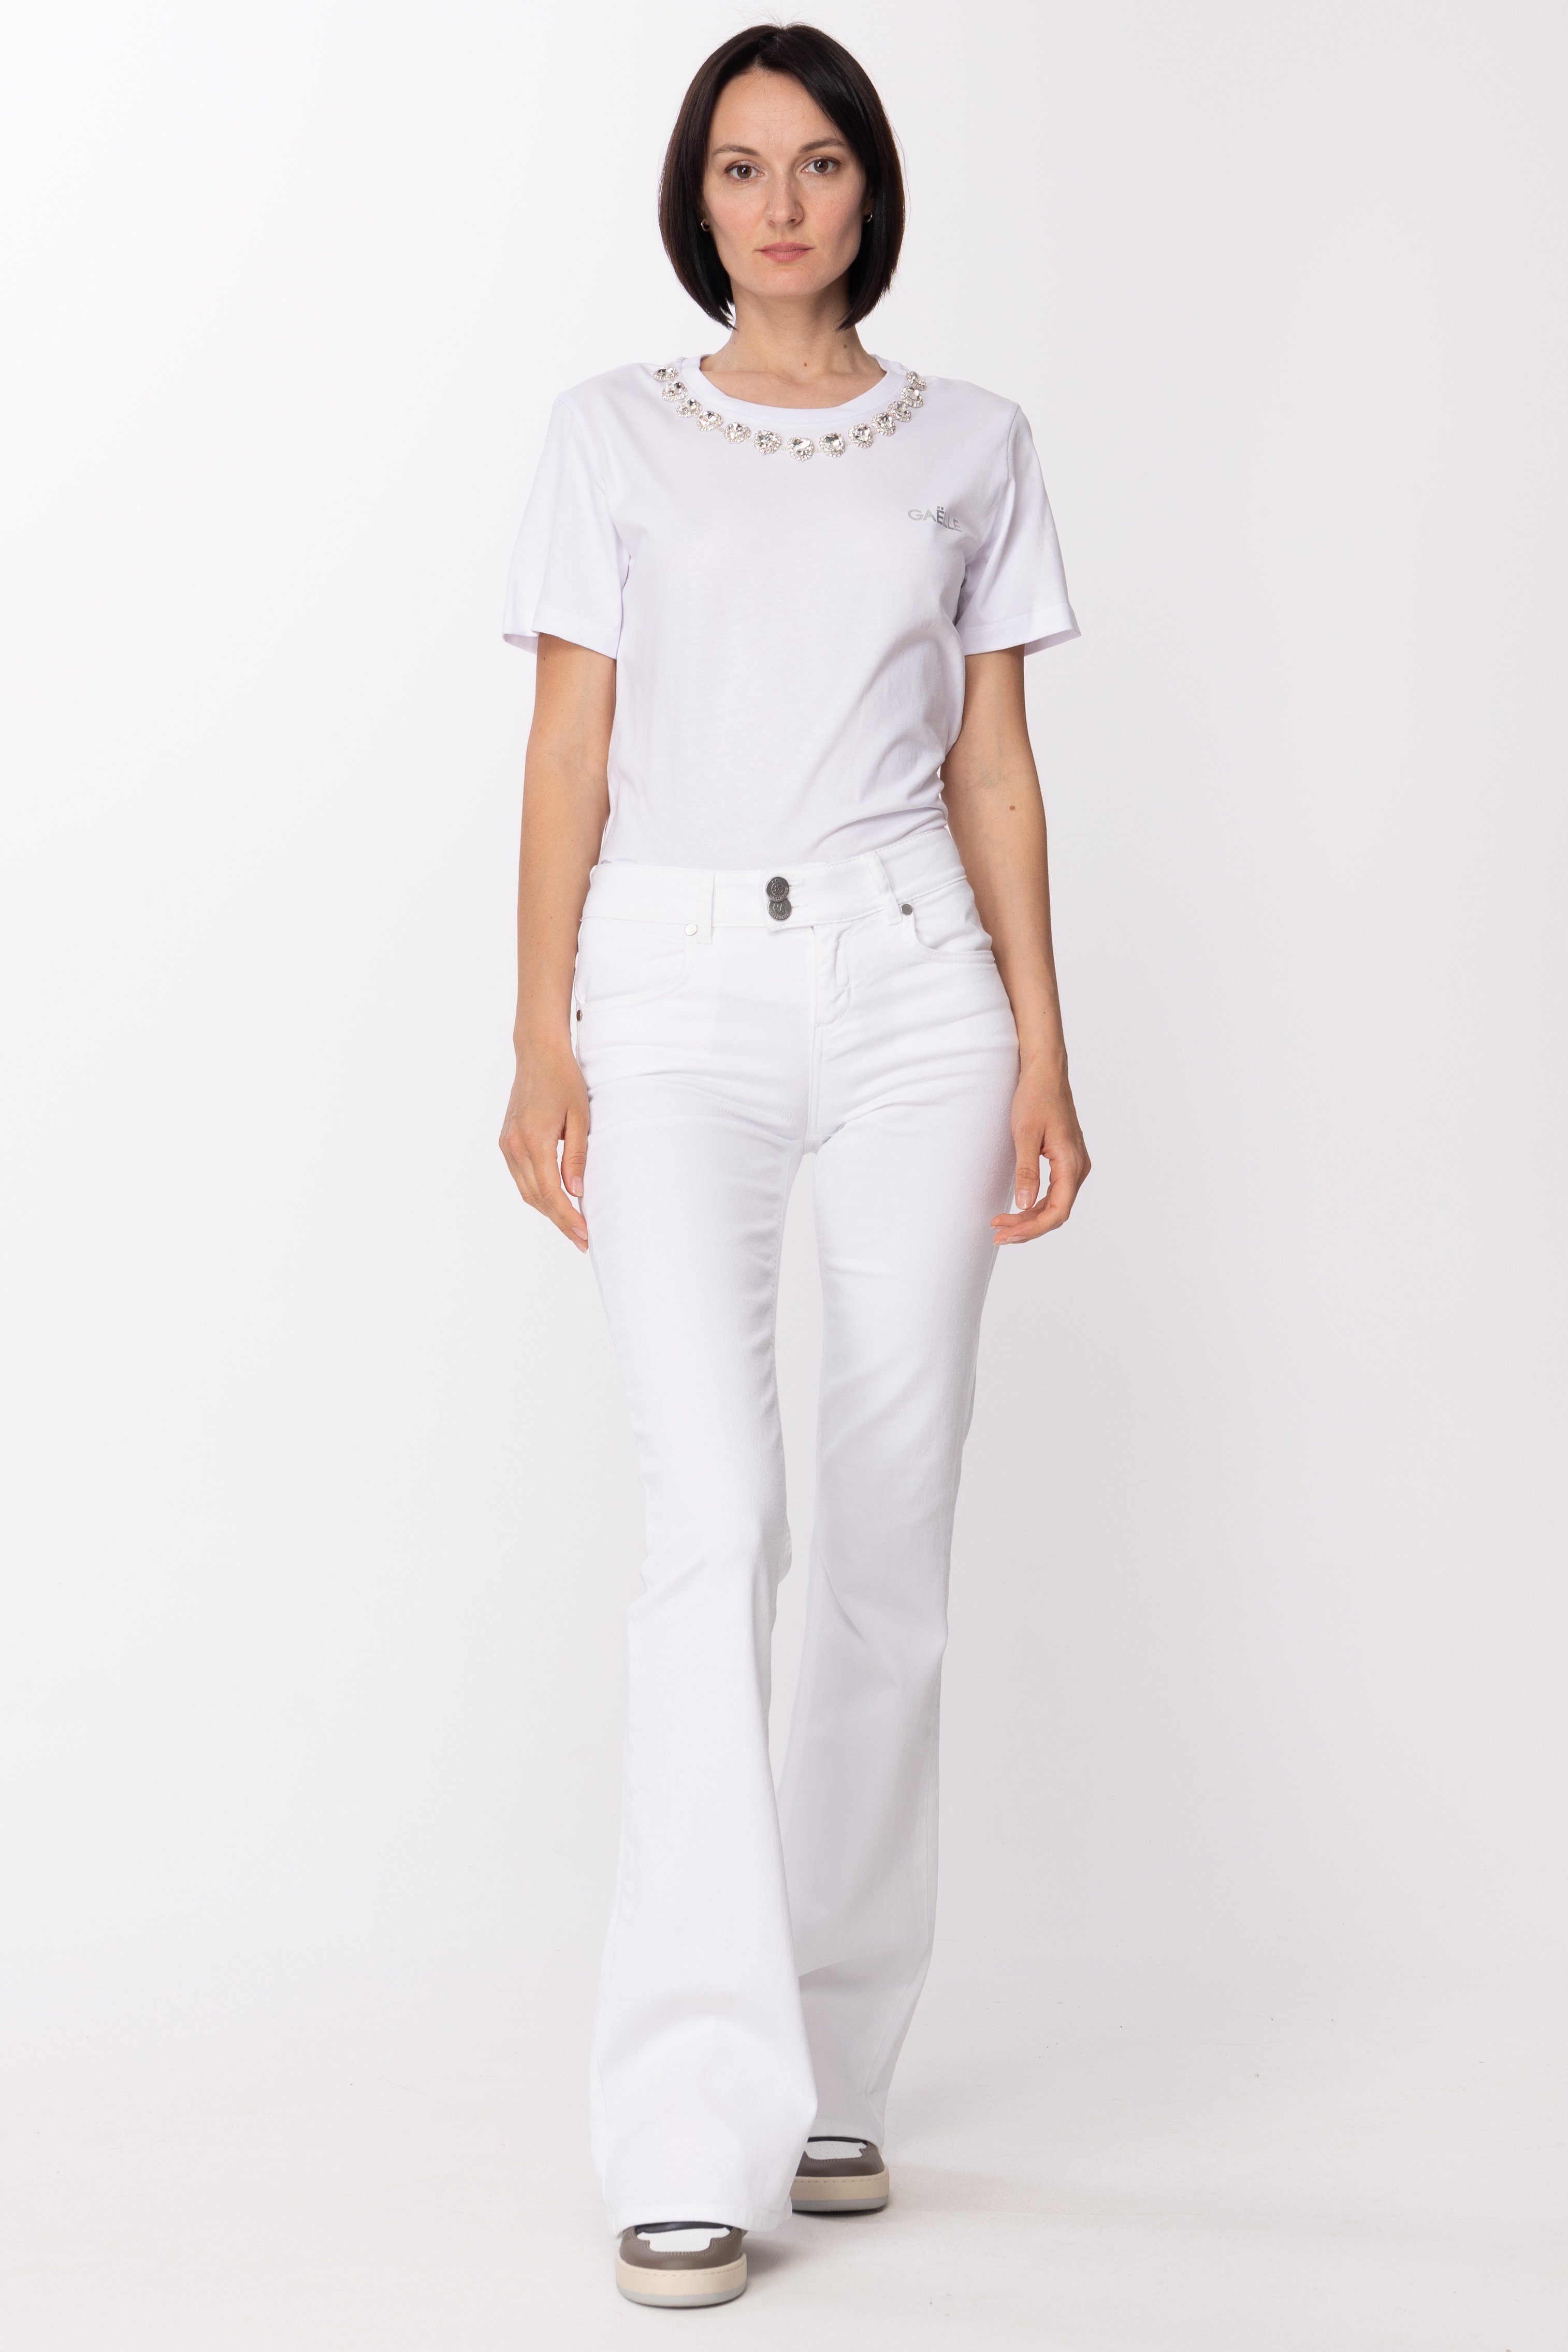 Anteprima: Gaelle Paris T-shirt con cuori in strass Bianco